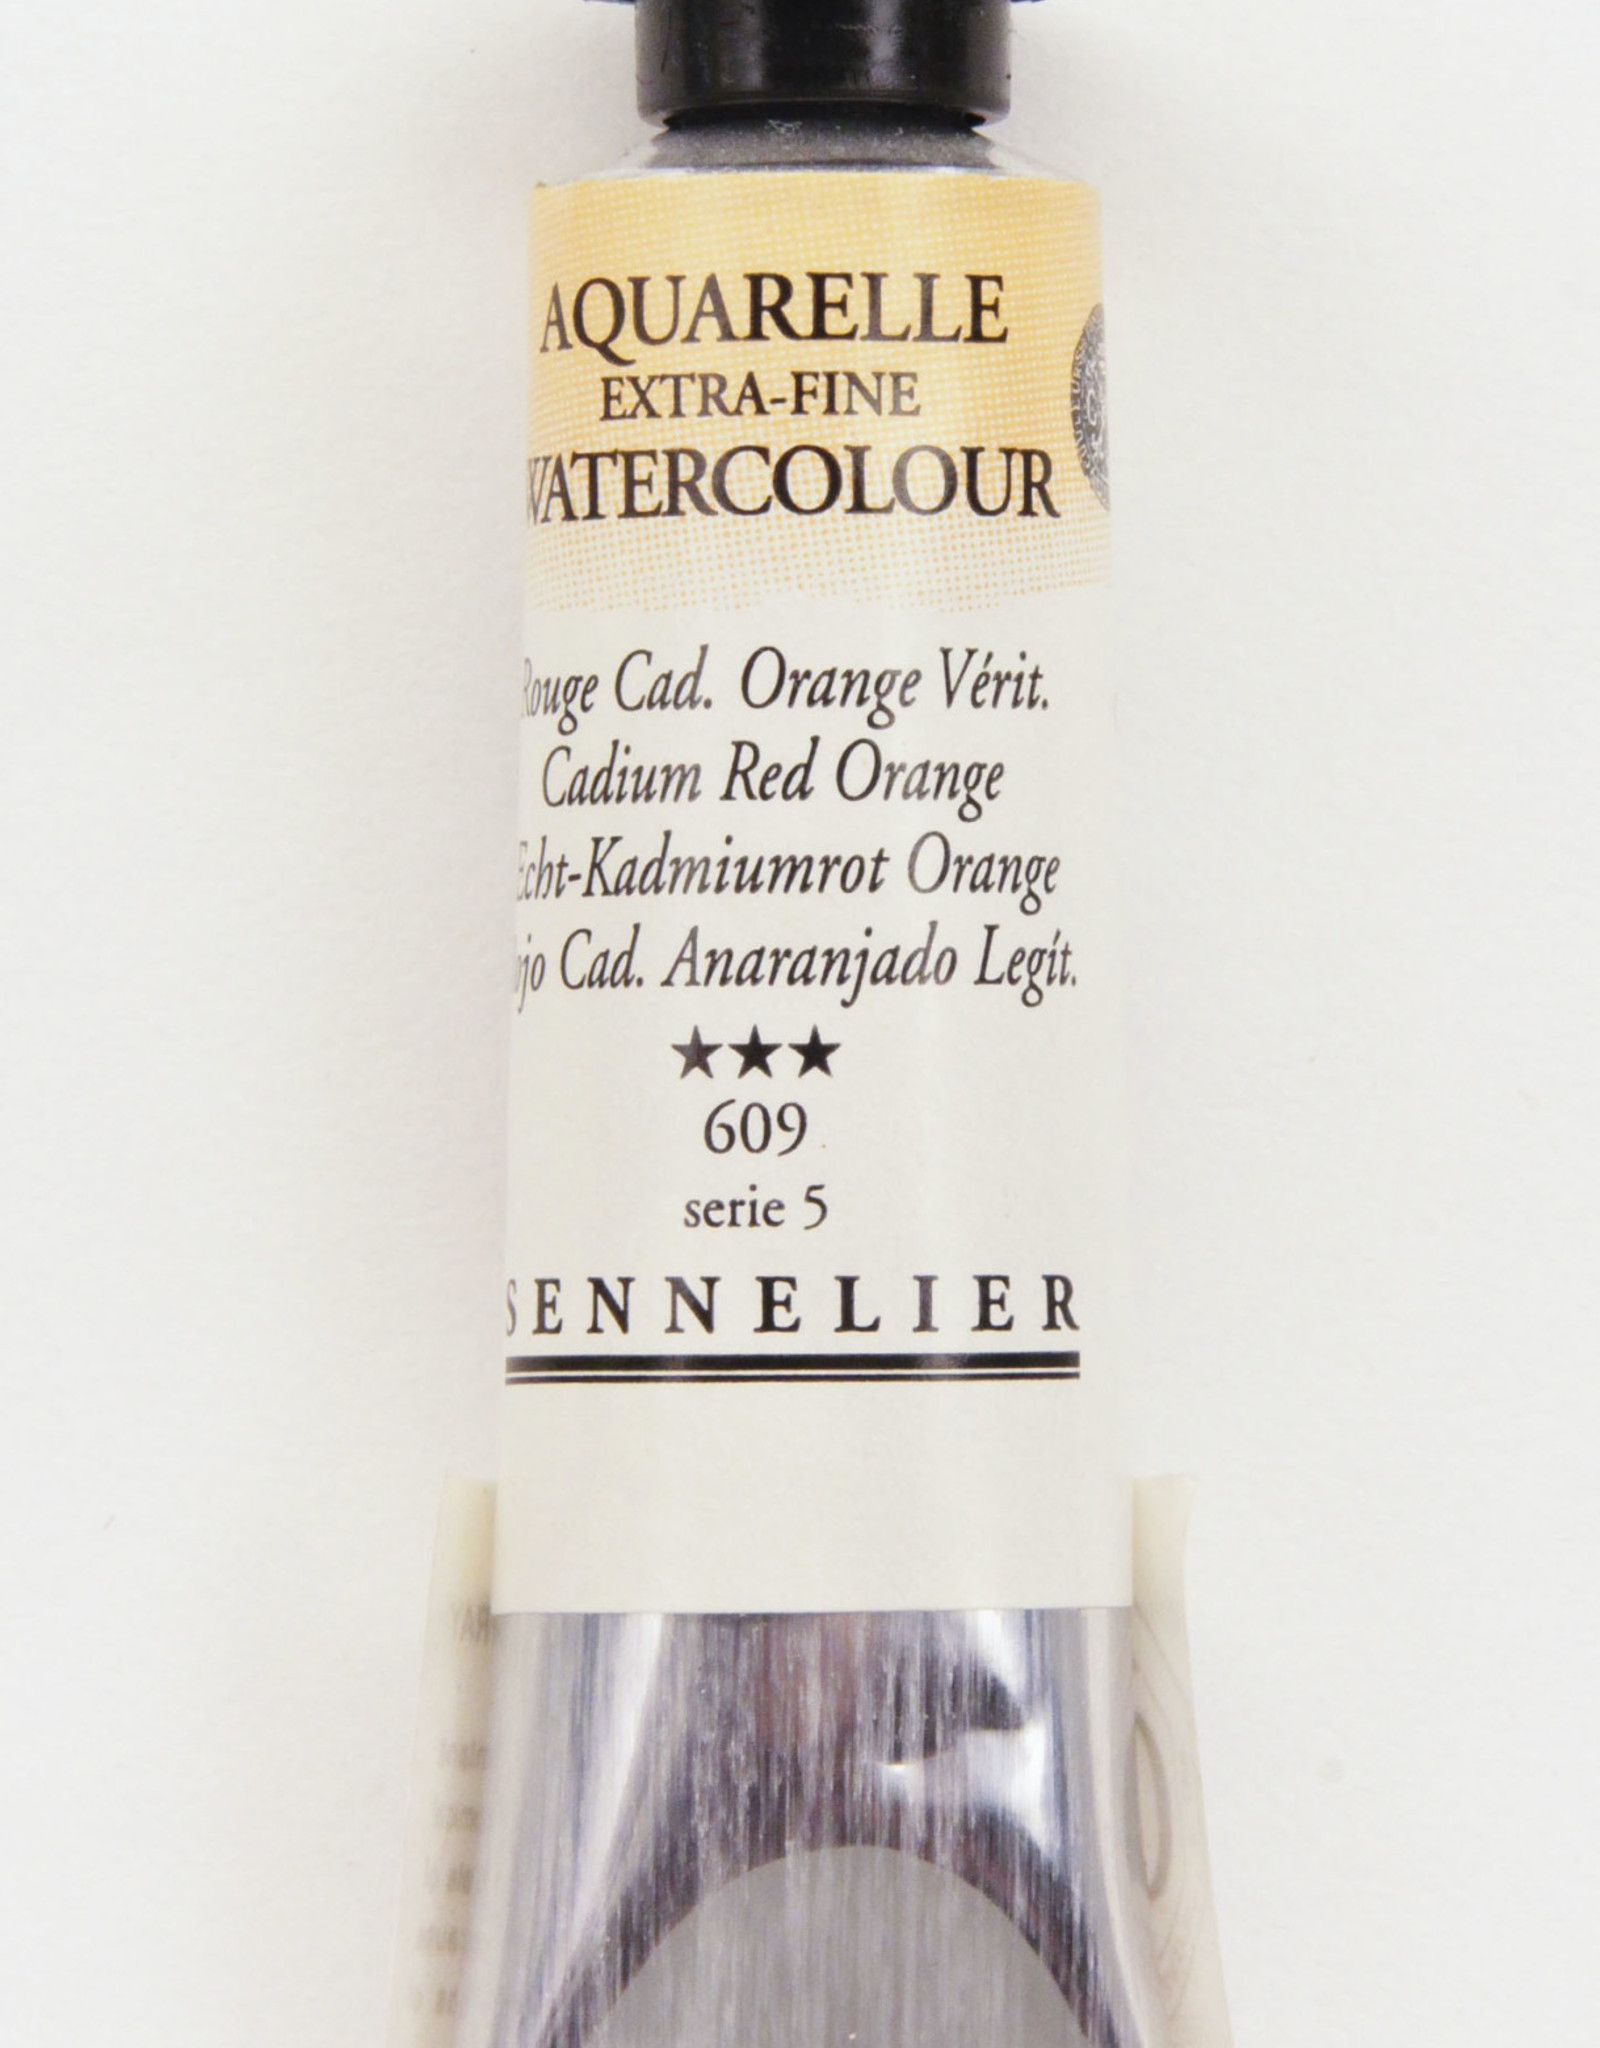 Sennelier, Aquarelle Watercolor Paint, Cadmium Red Orange, 609, 10ml Tube, Series 5